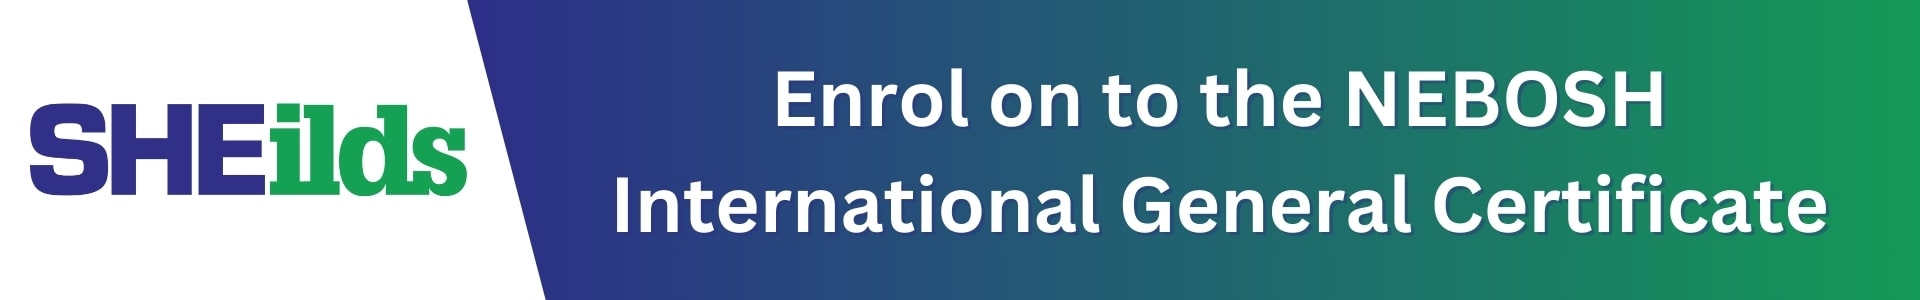 Enrol on the NEBOSH International General Certificate